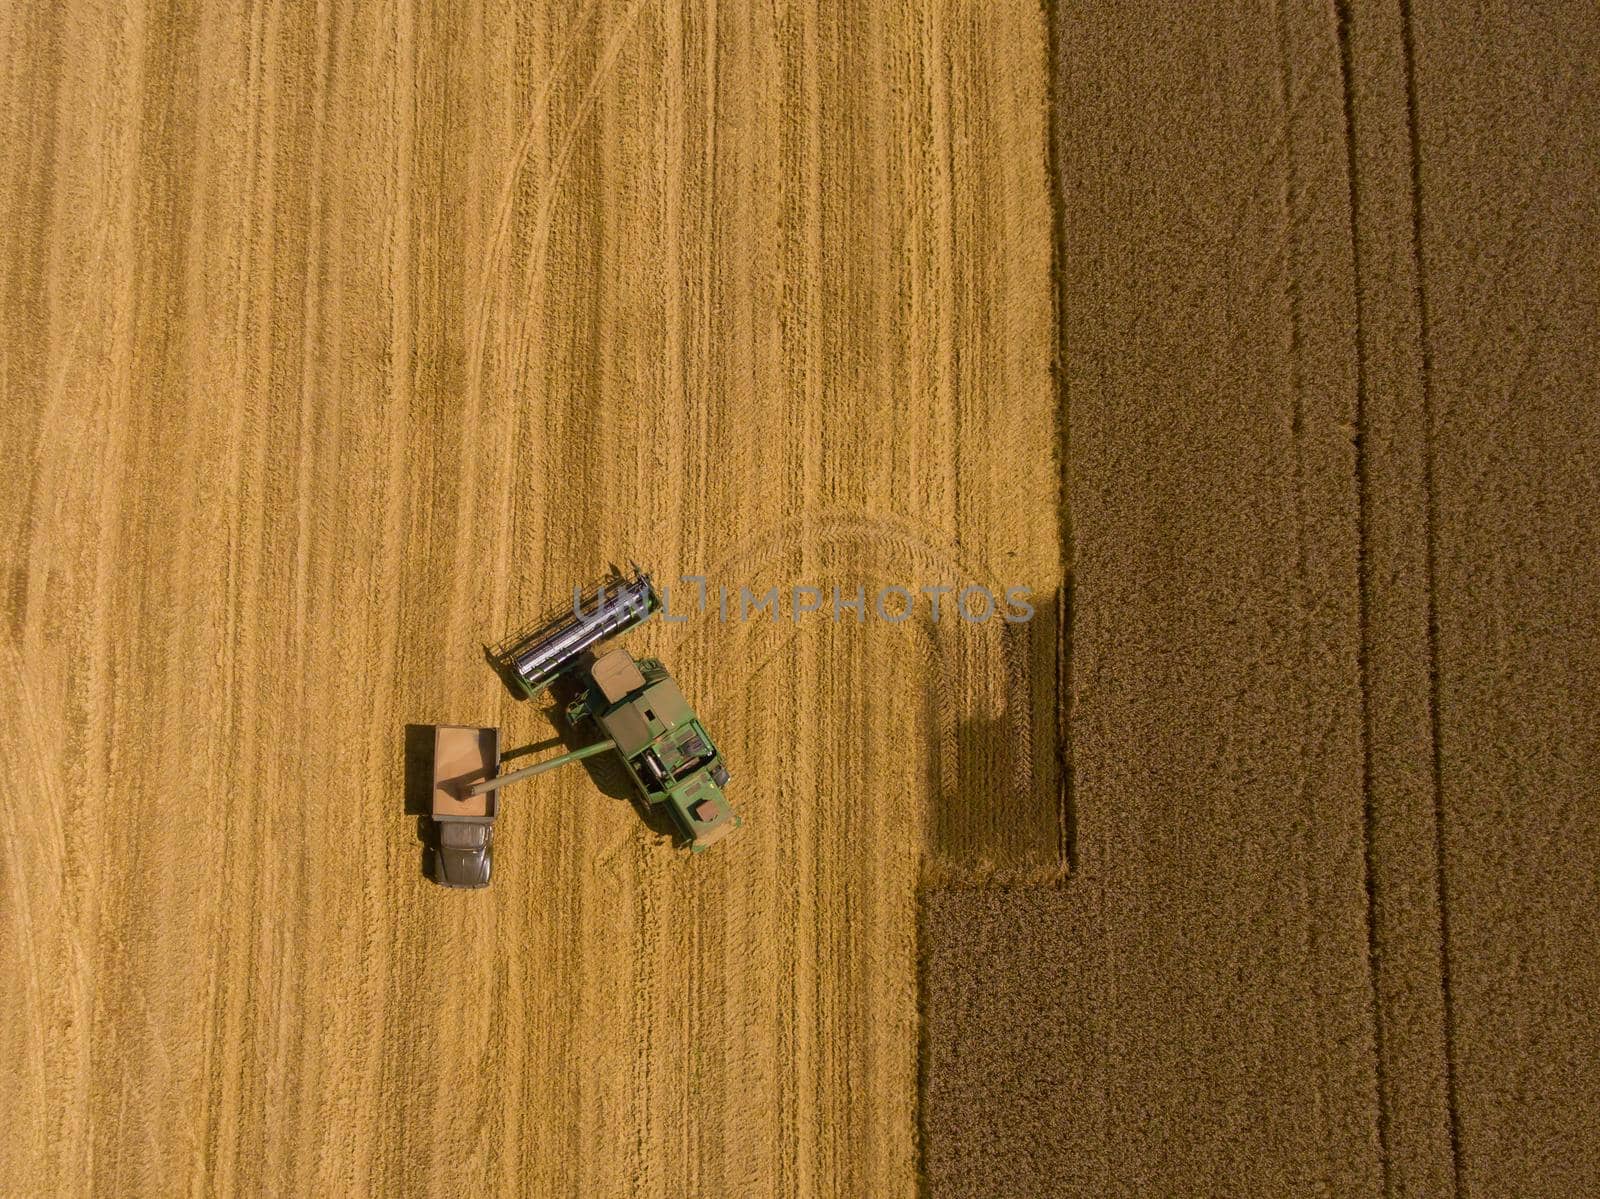 Harvester machine working in field. Aerial view.